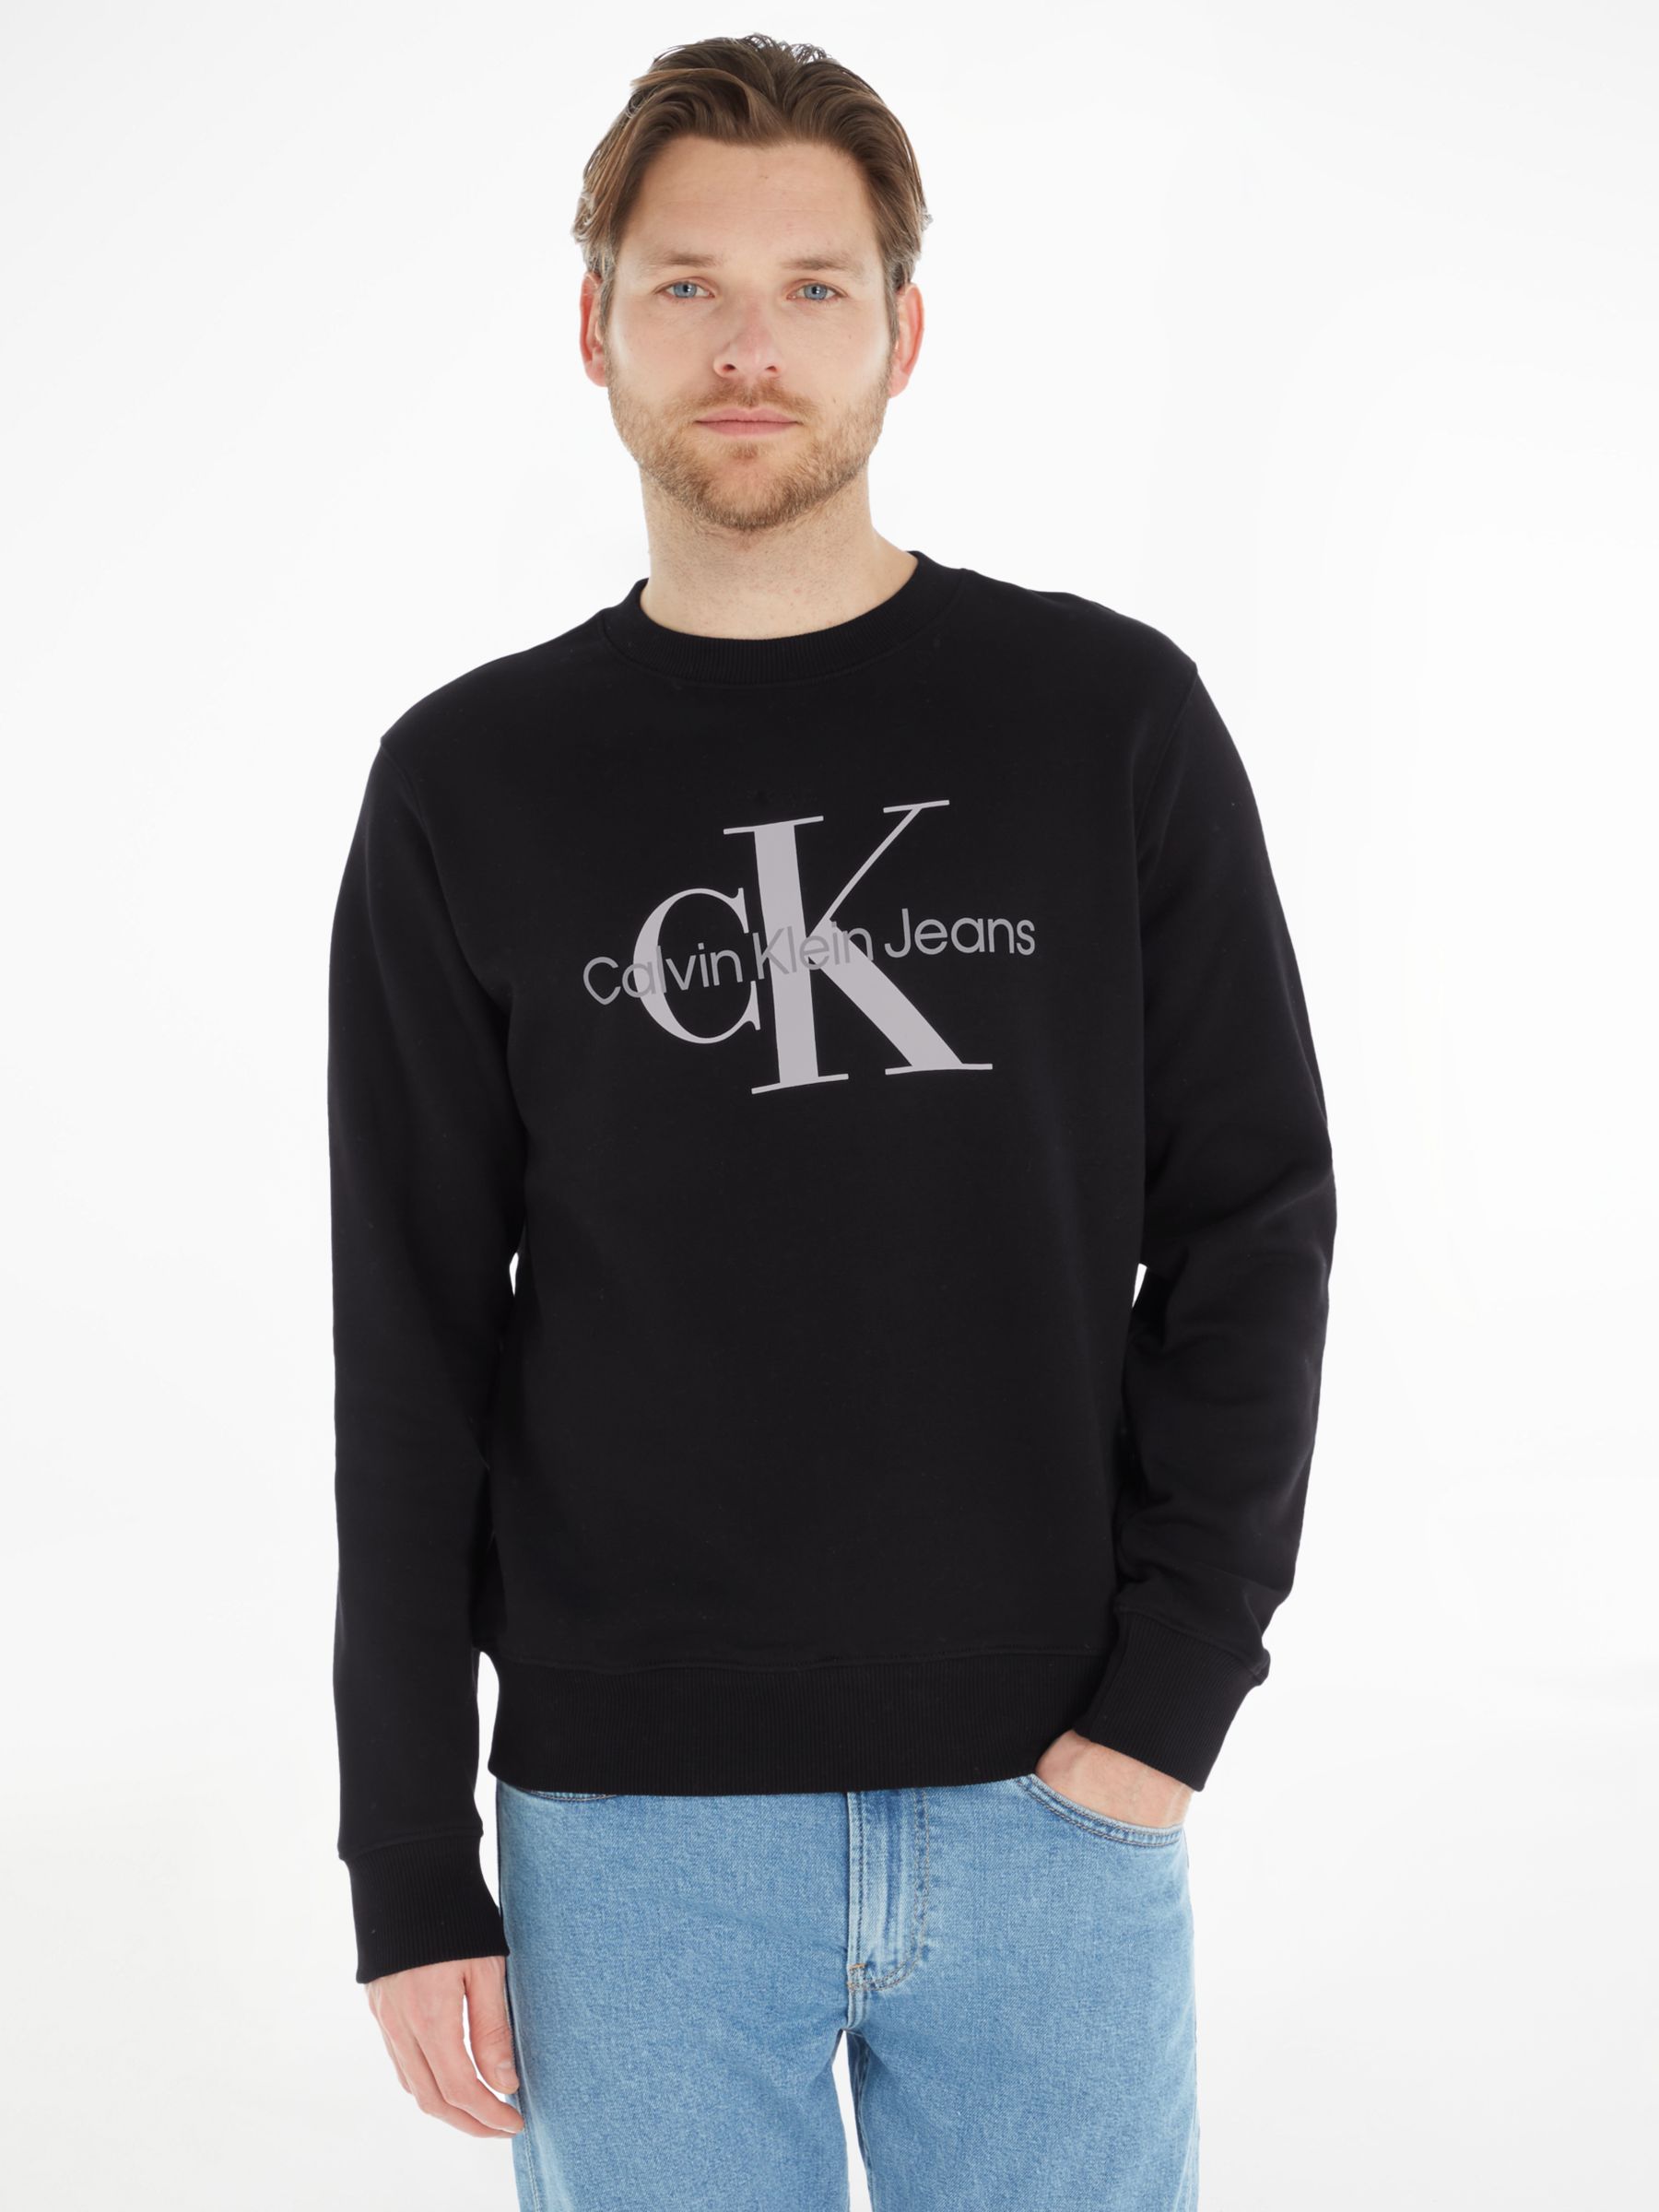 Calvin Klein Core Lewis Jeans Sweatshirt, Logo Partners at & Ck Monogram Cotton John Black